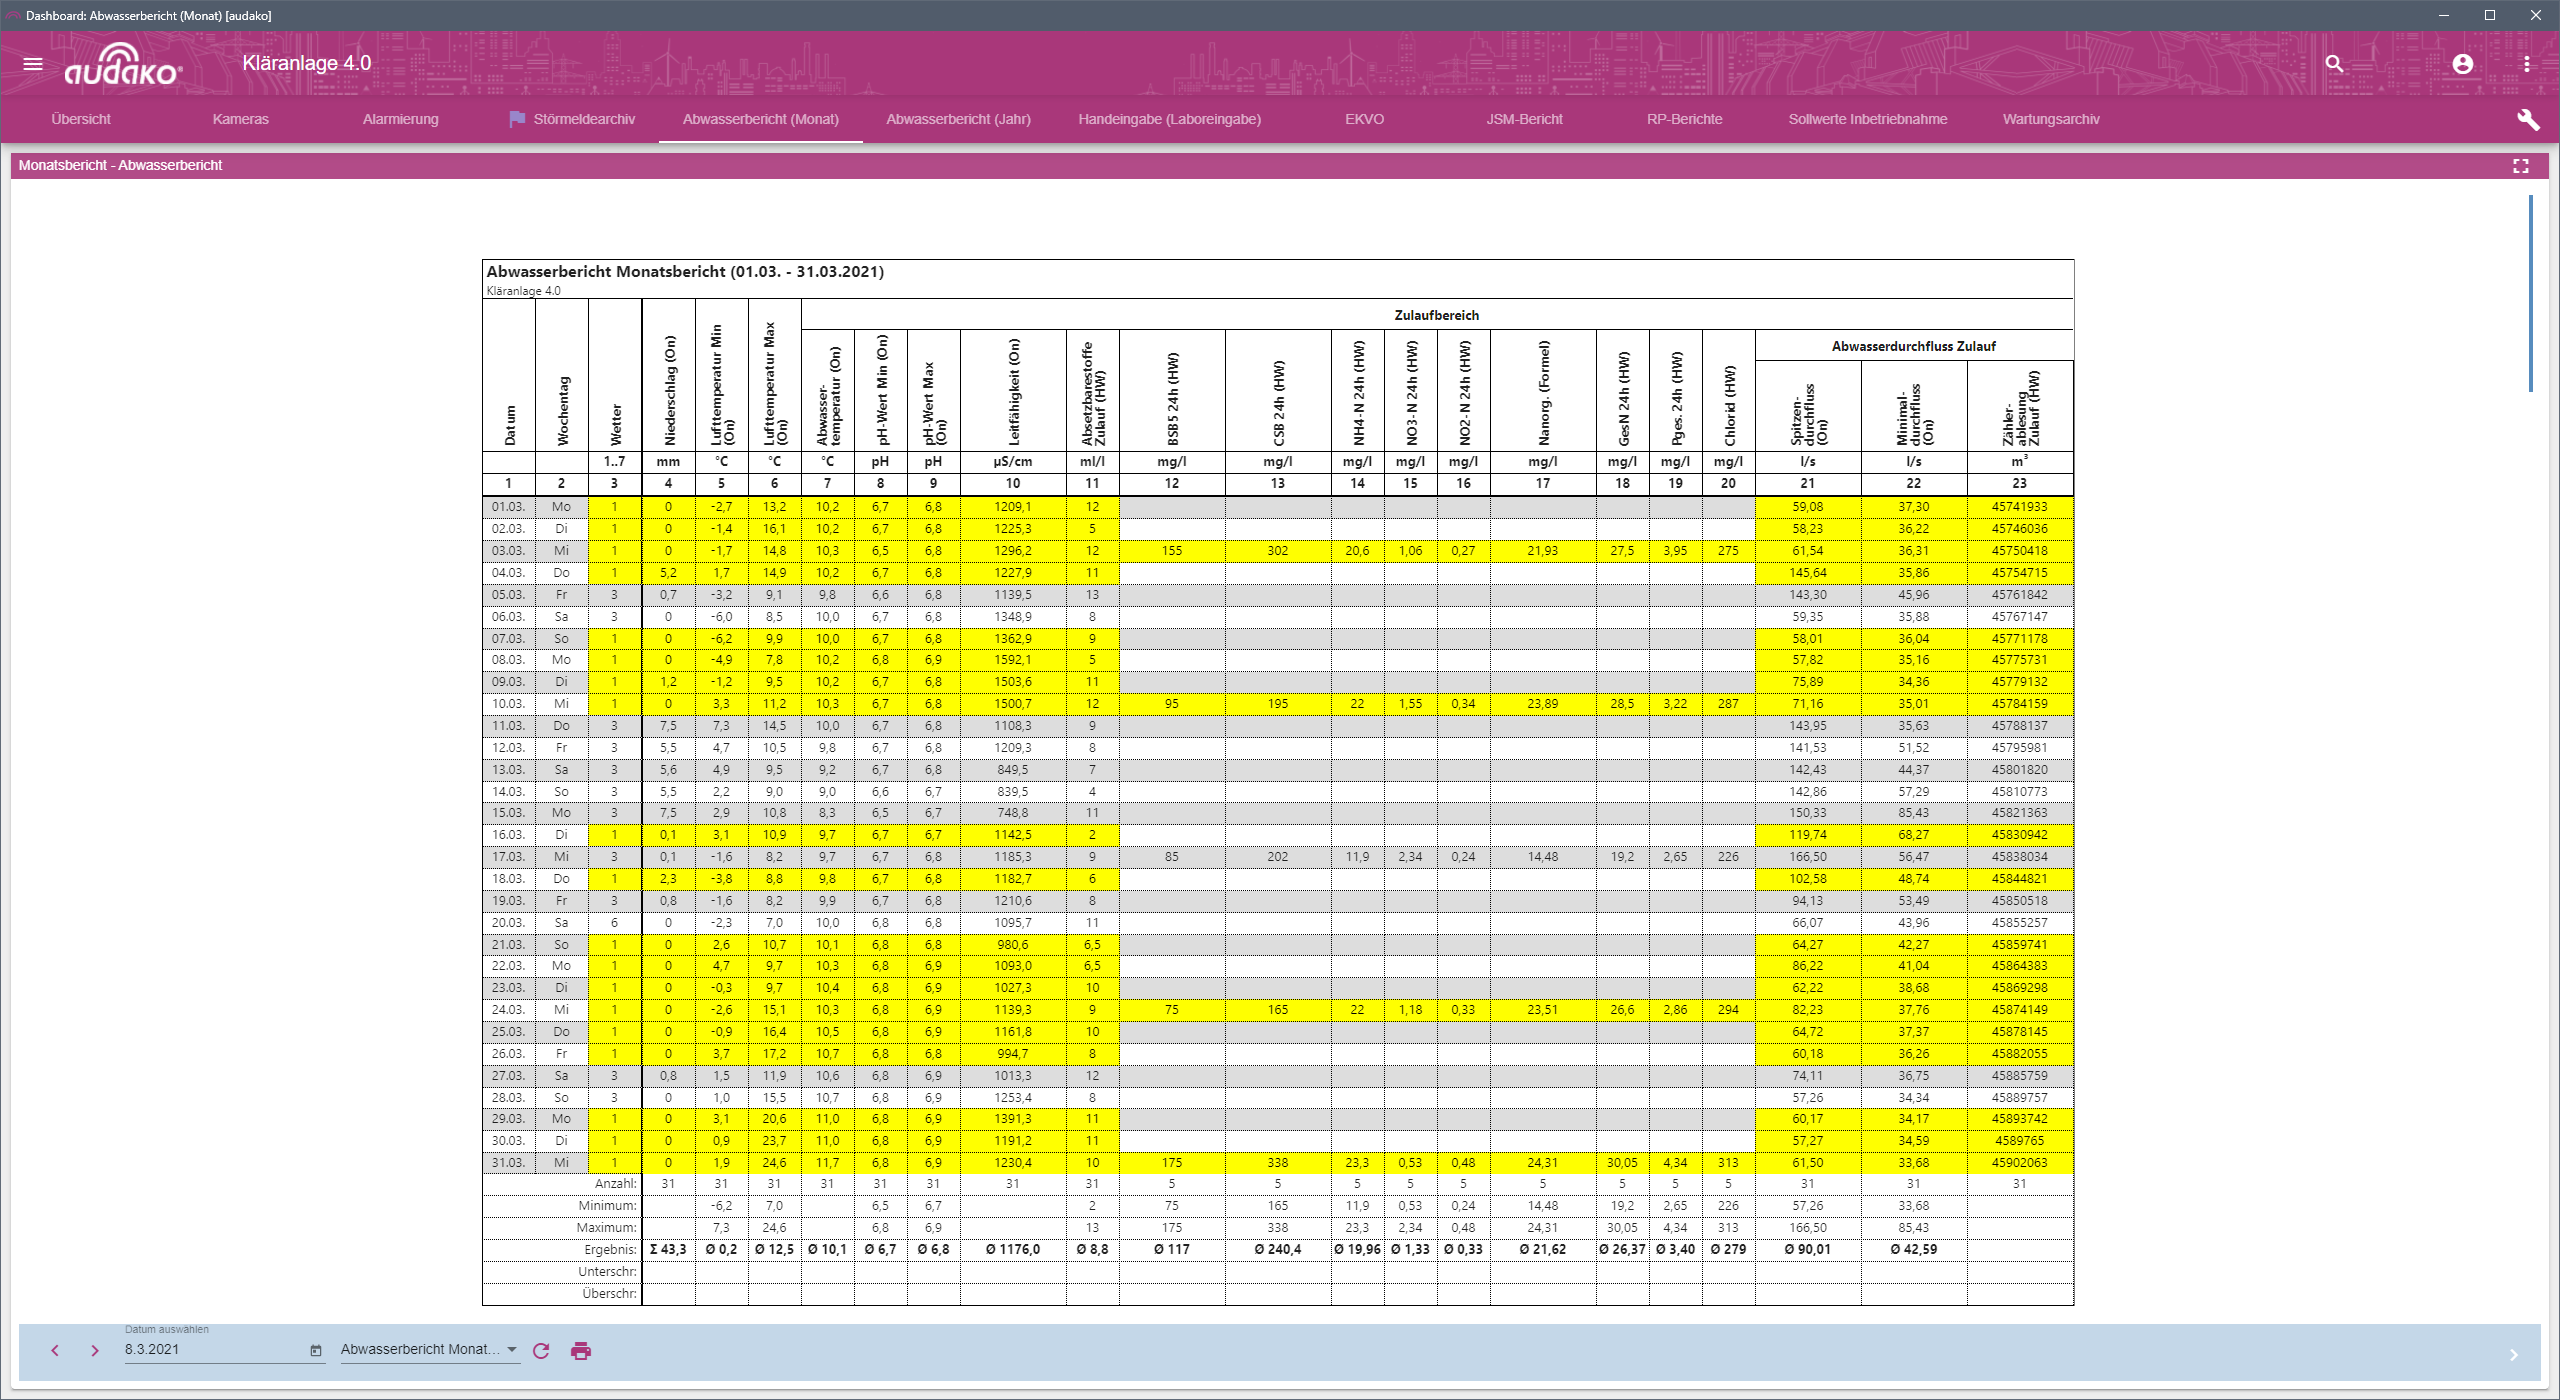 Abwasserbericht Monatsbericht (Screenshot audako)